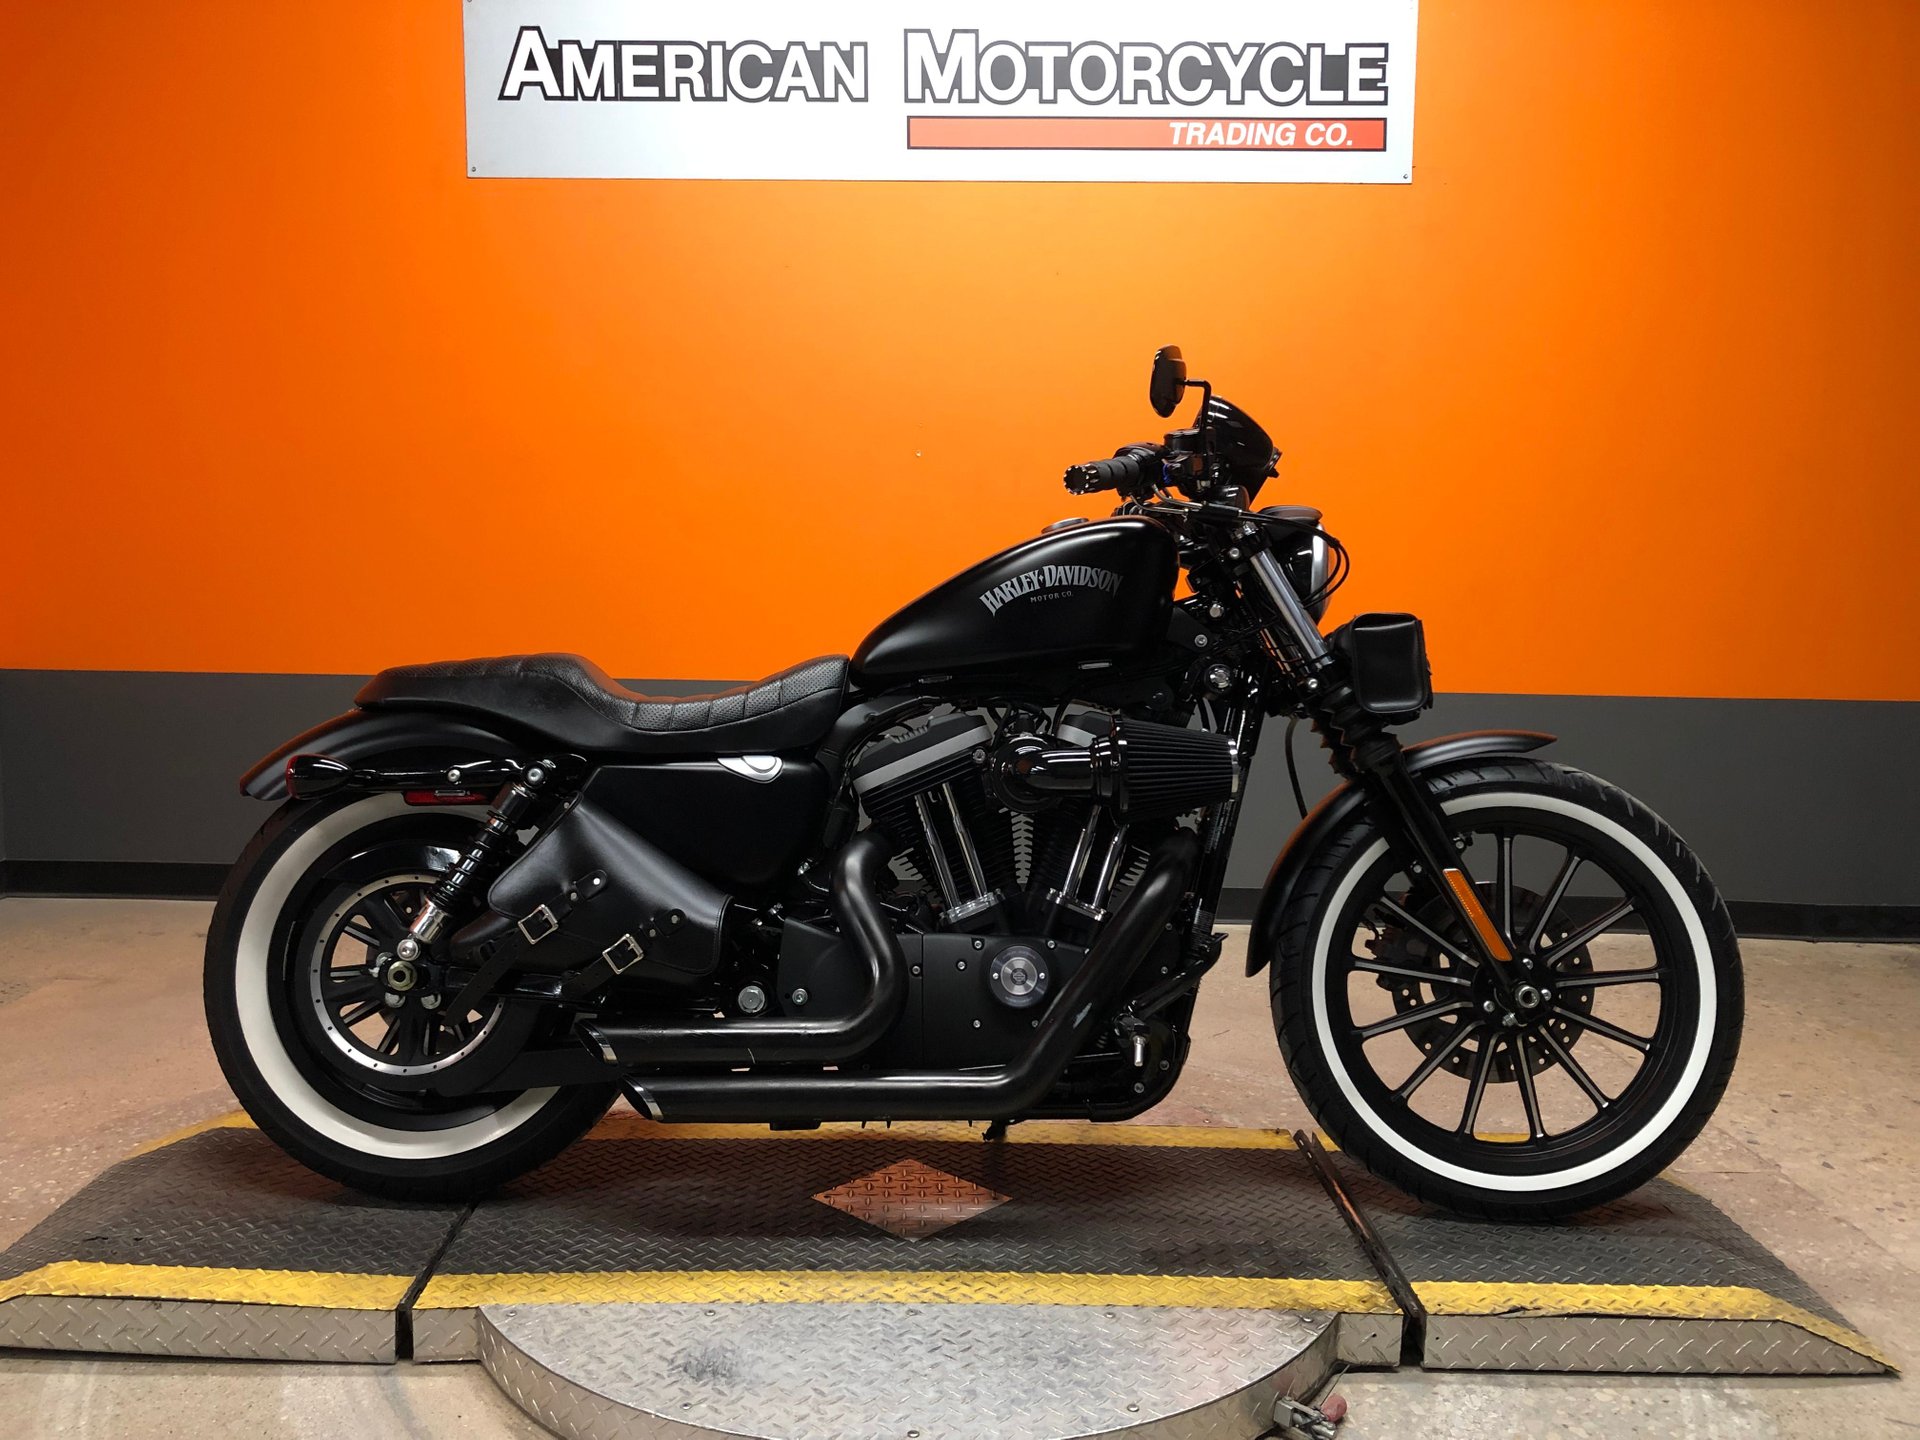 2012 Harley-Davidson Sportster 883 | American Motorcycle Trading Company -  Used Harley Davidson Motorcycles